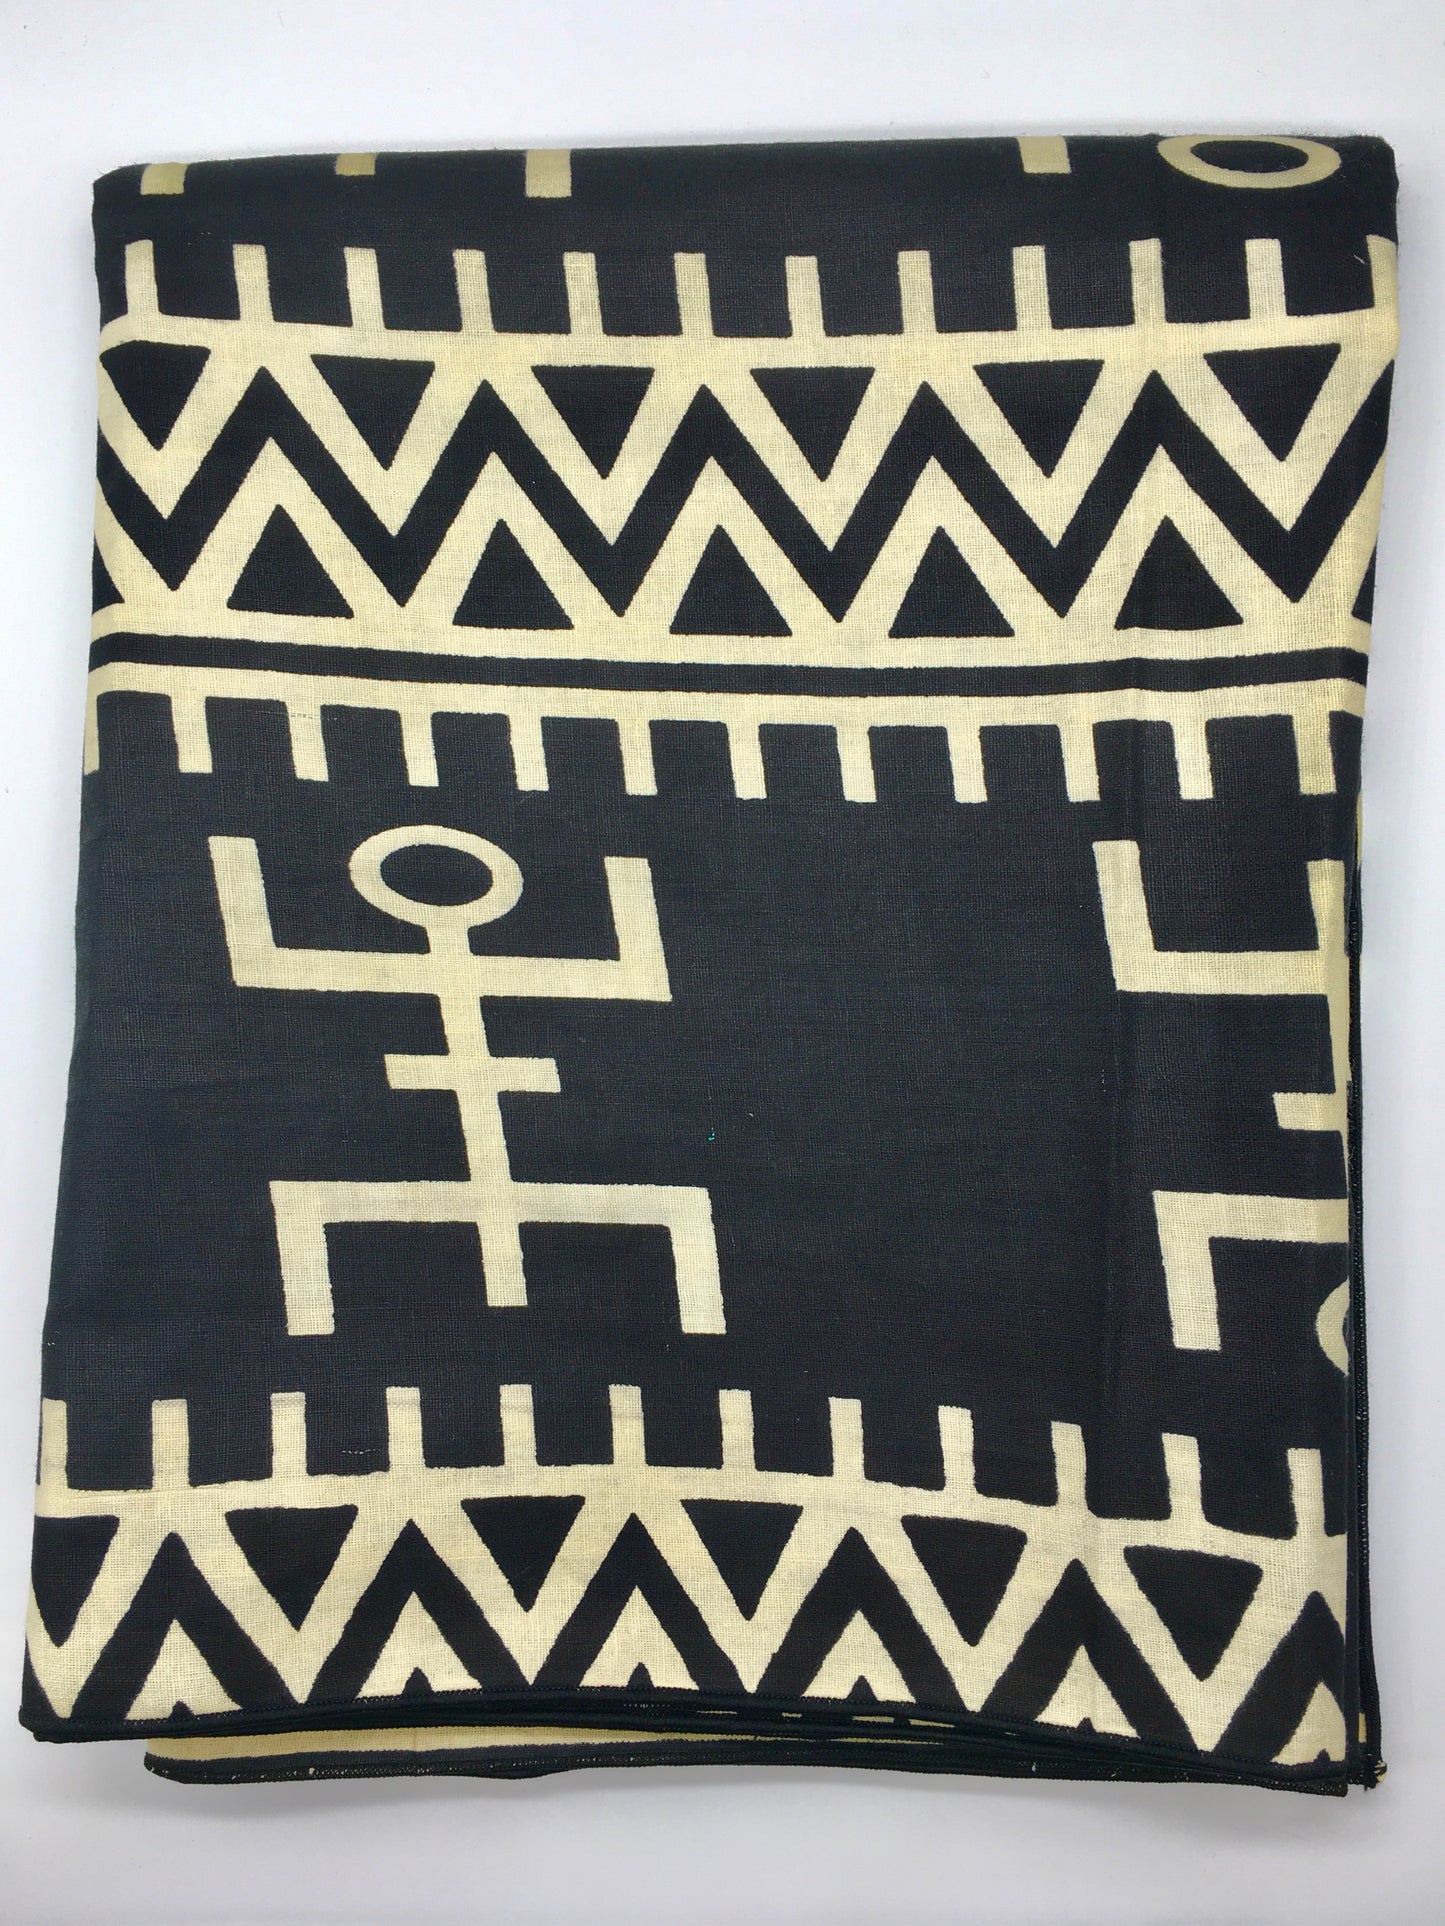 Head Wrap: Black and White Tribal Print